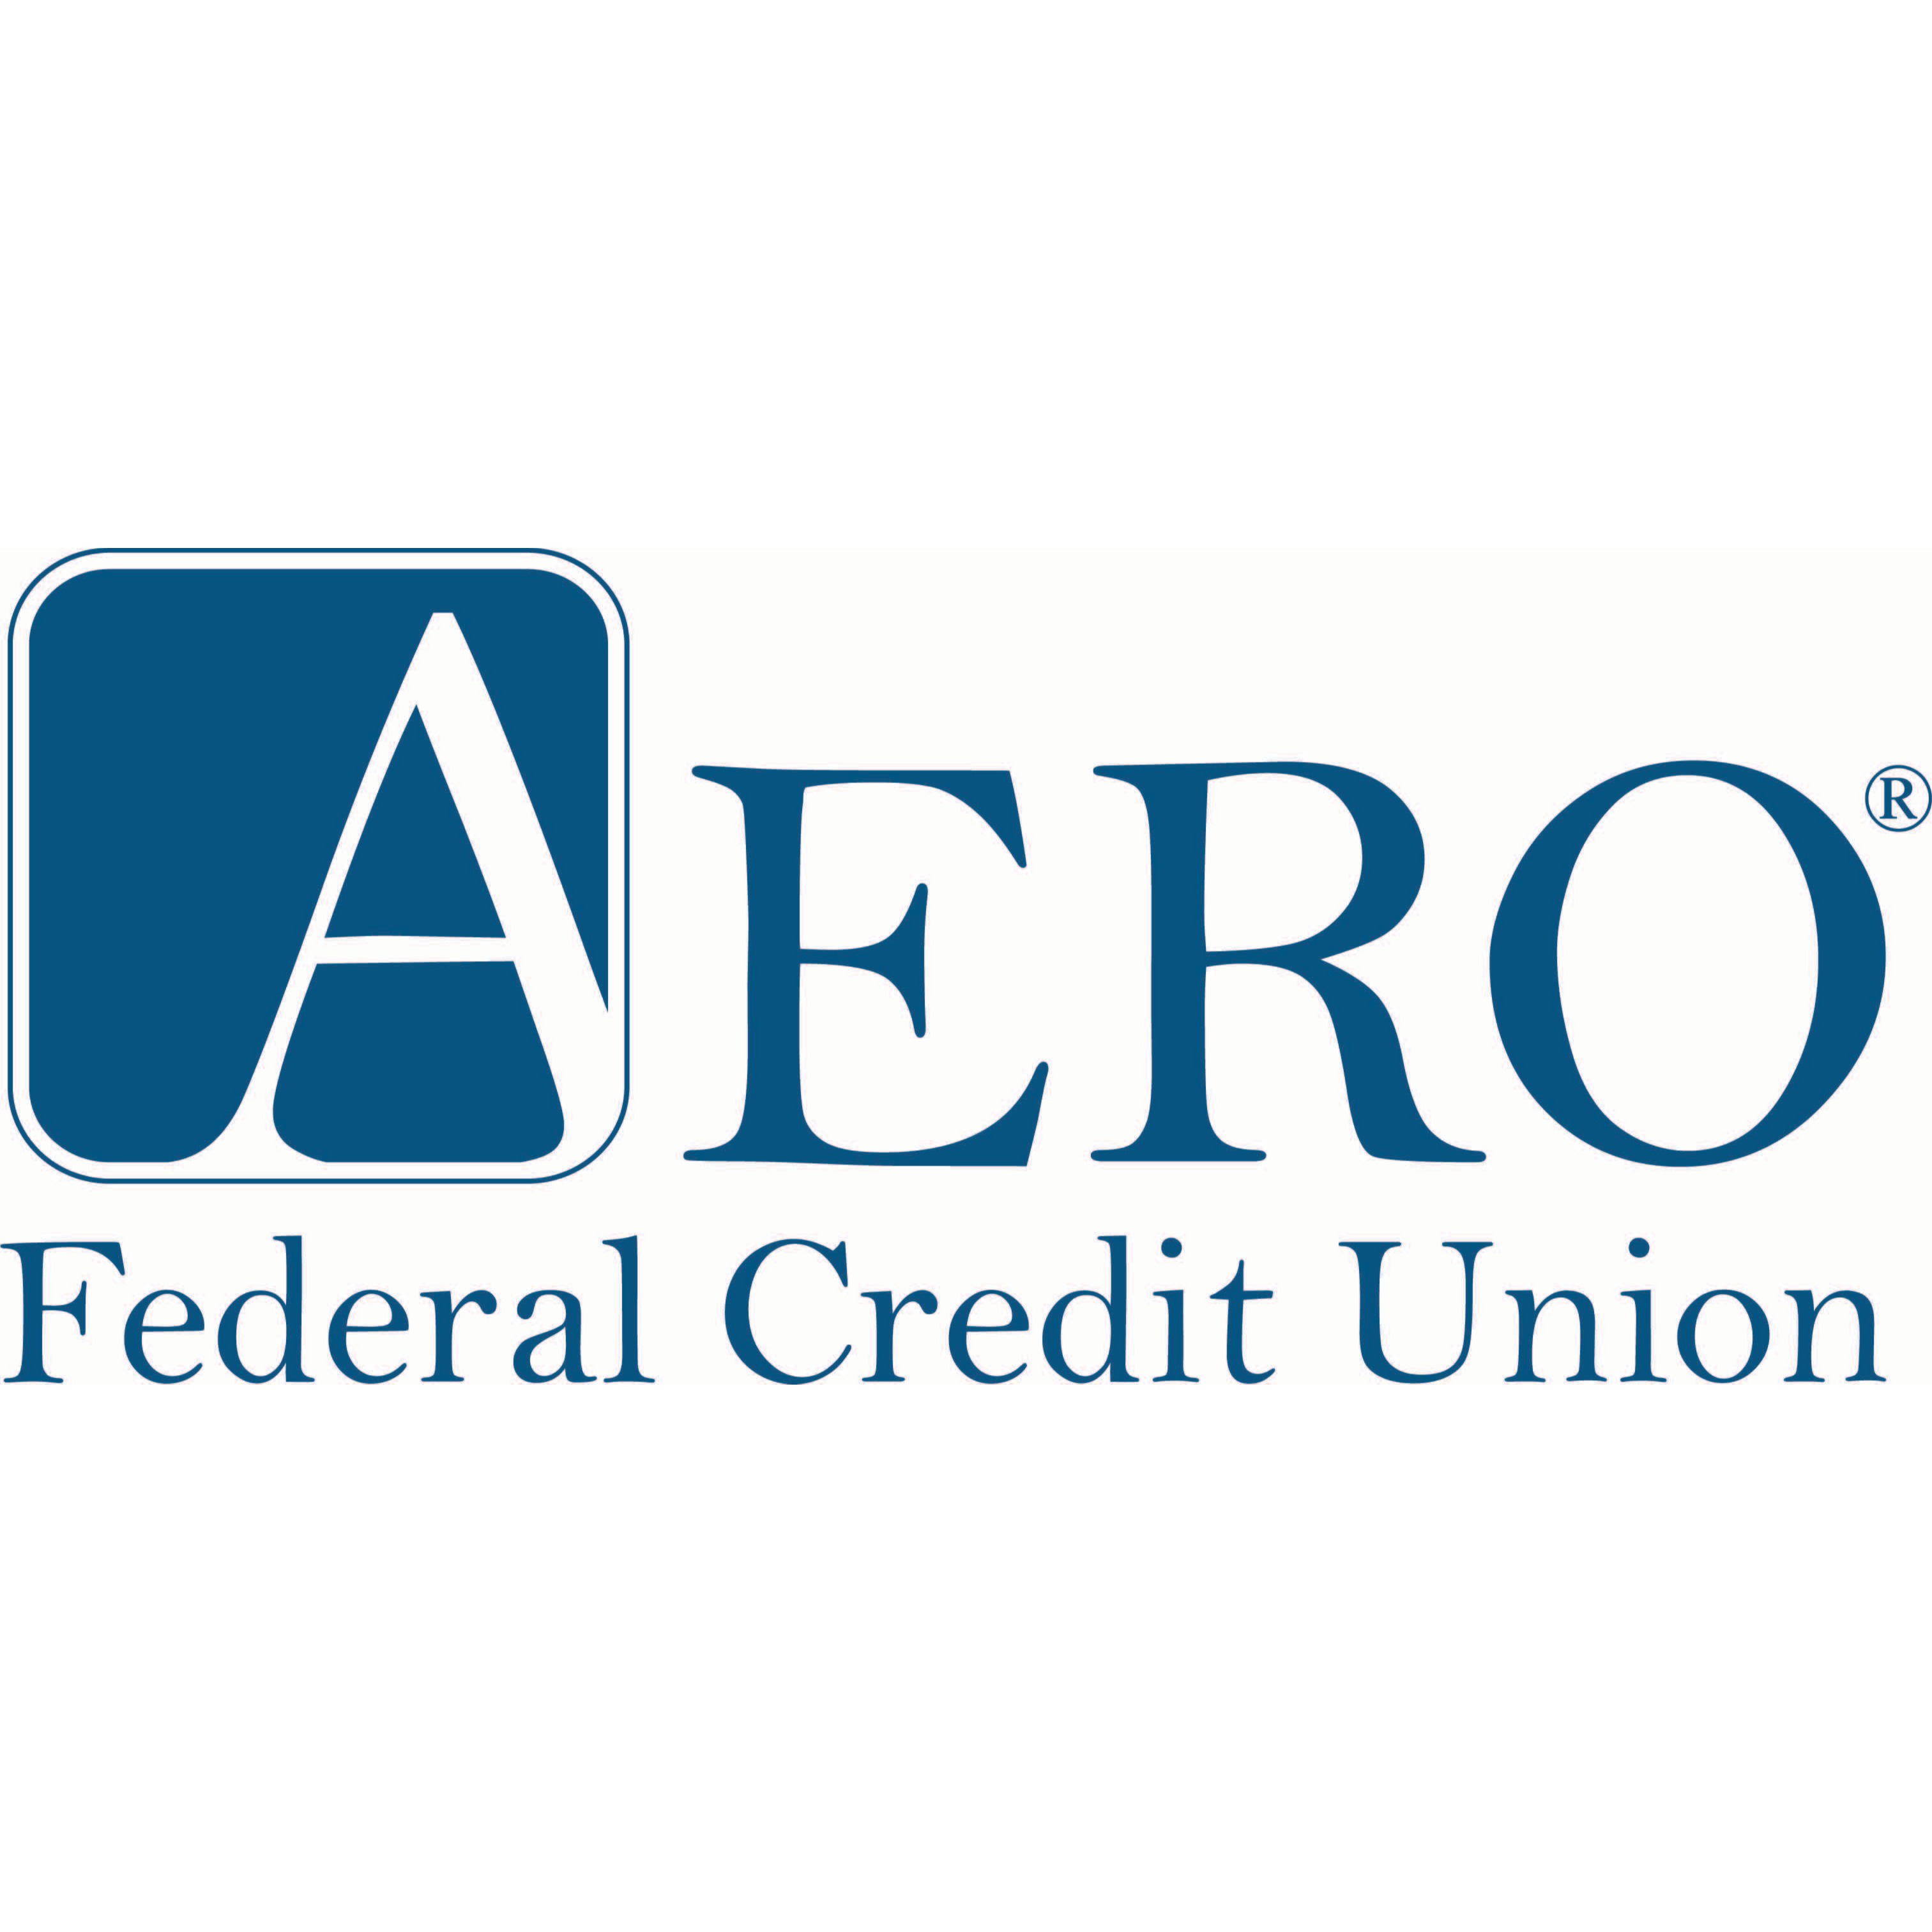 AERO Federal Credit Union Photo